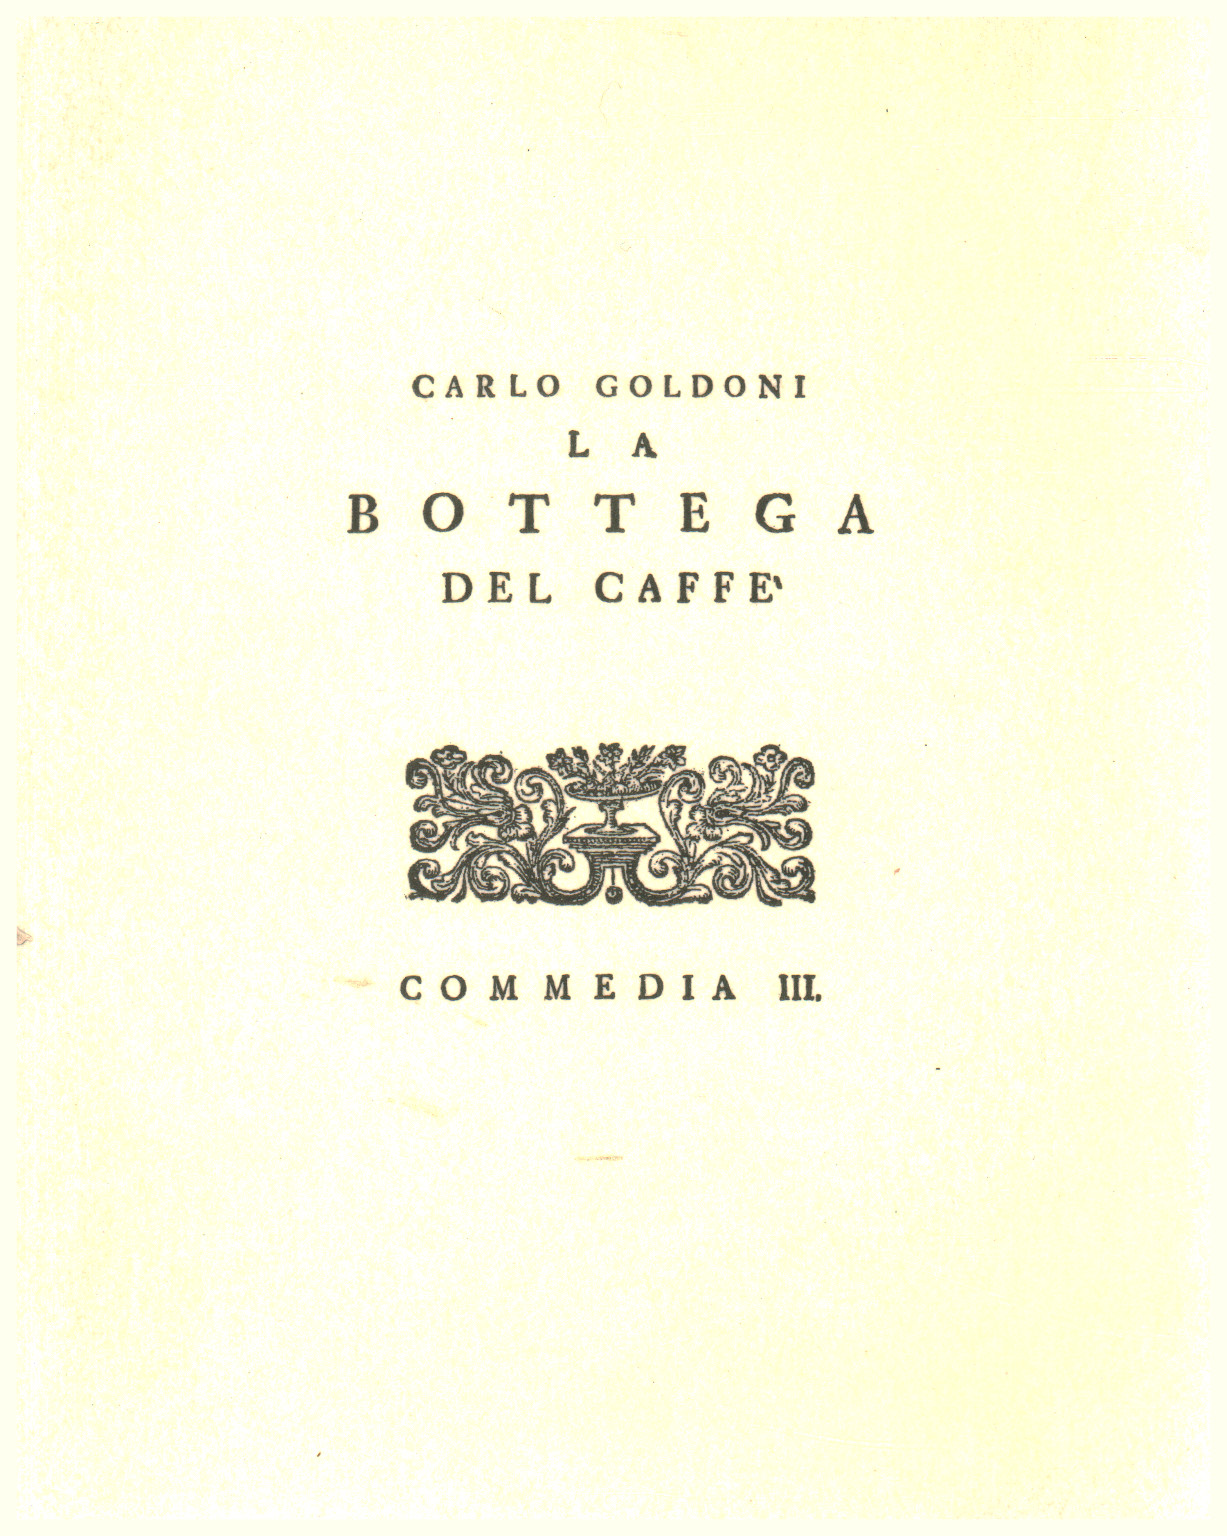 La bottega del caffè, Carlo Goldoni